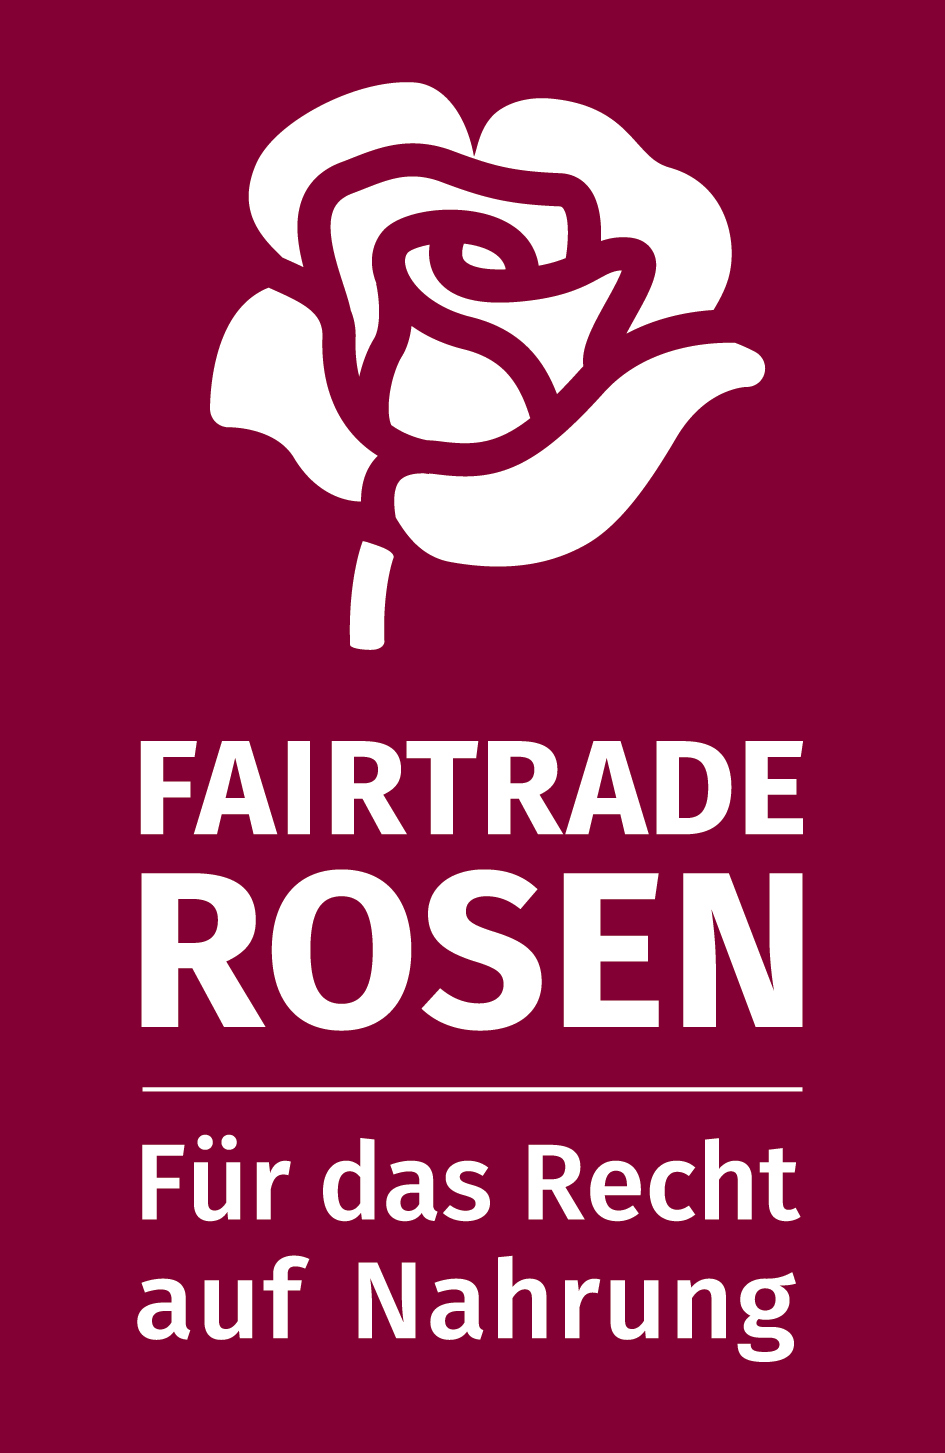 Rosen Fair